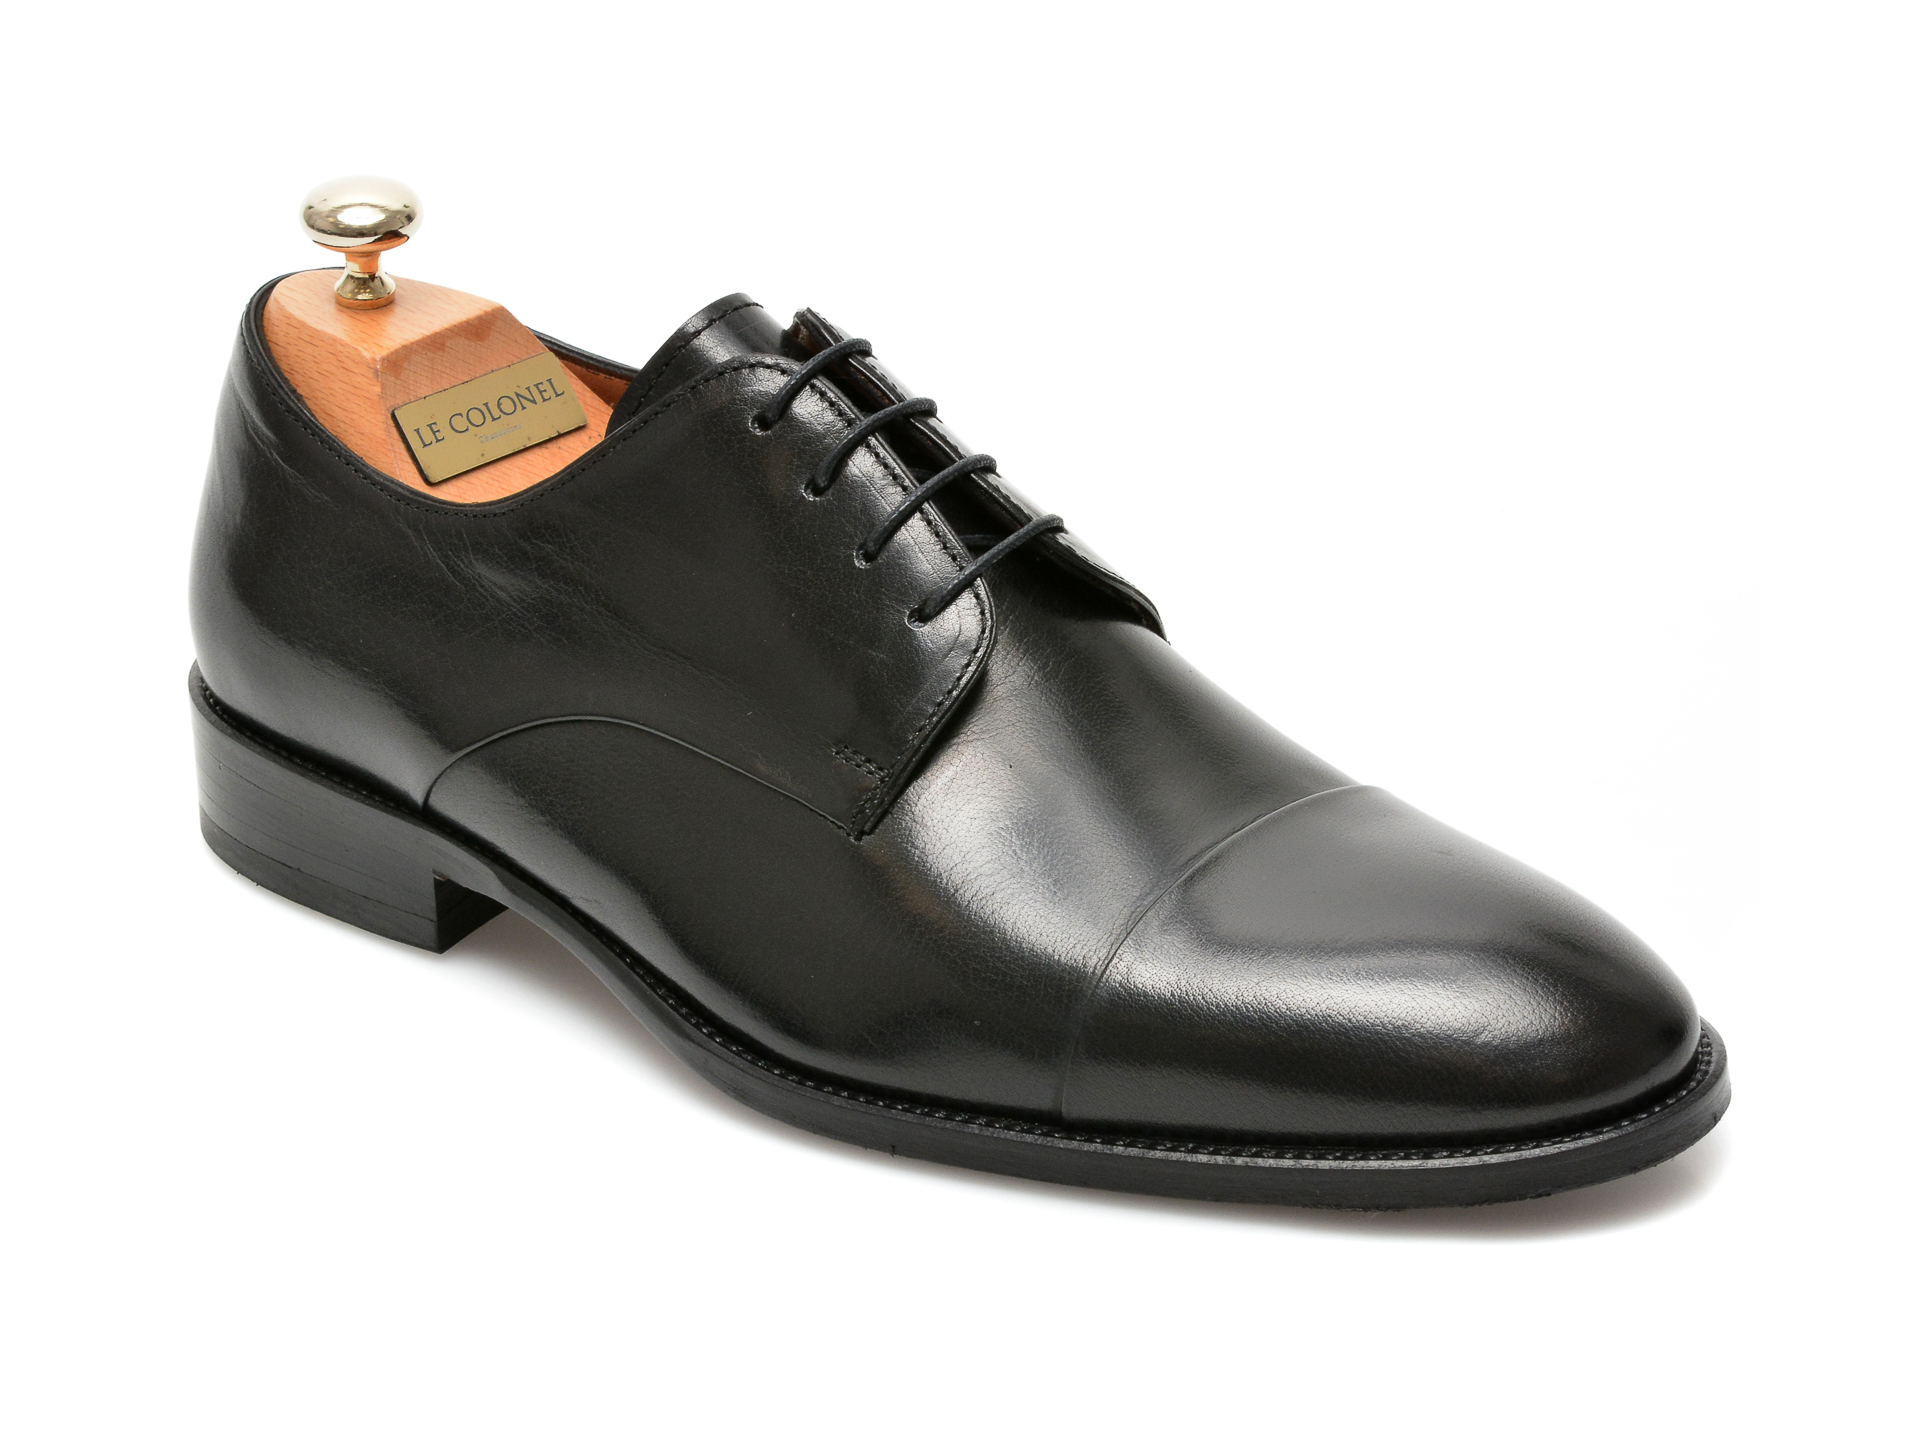 Pantofi LE COLONEL negri, 49809, din piele naturala imagine reduceri black friday 2021 Le Colonel